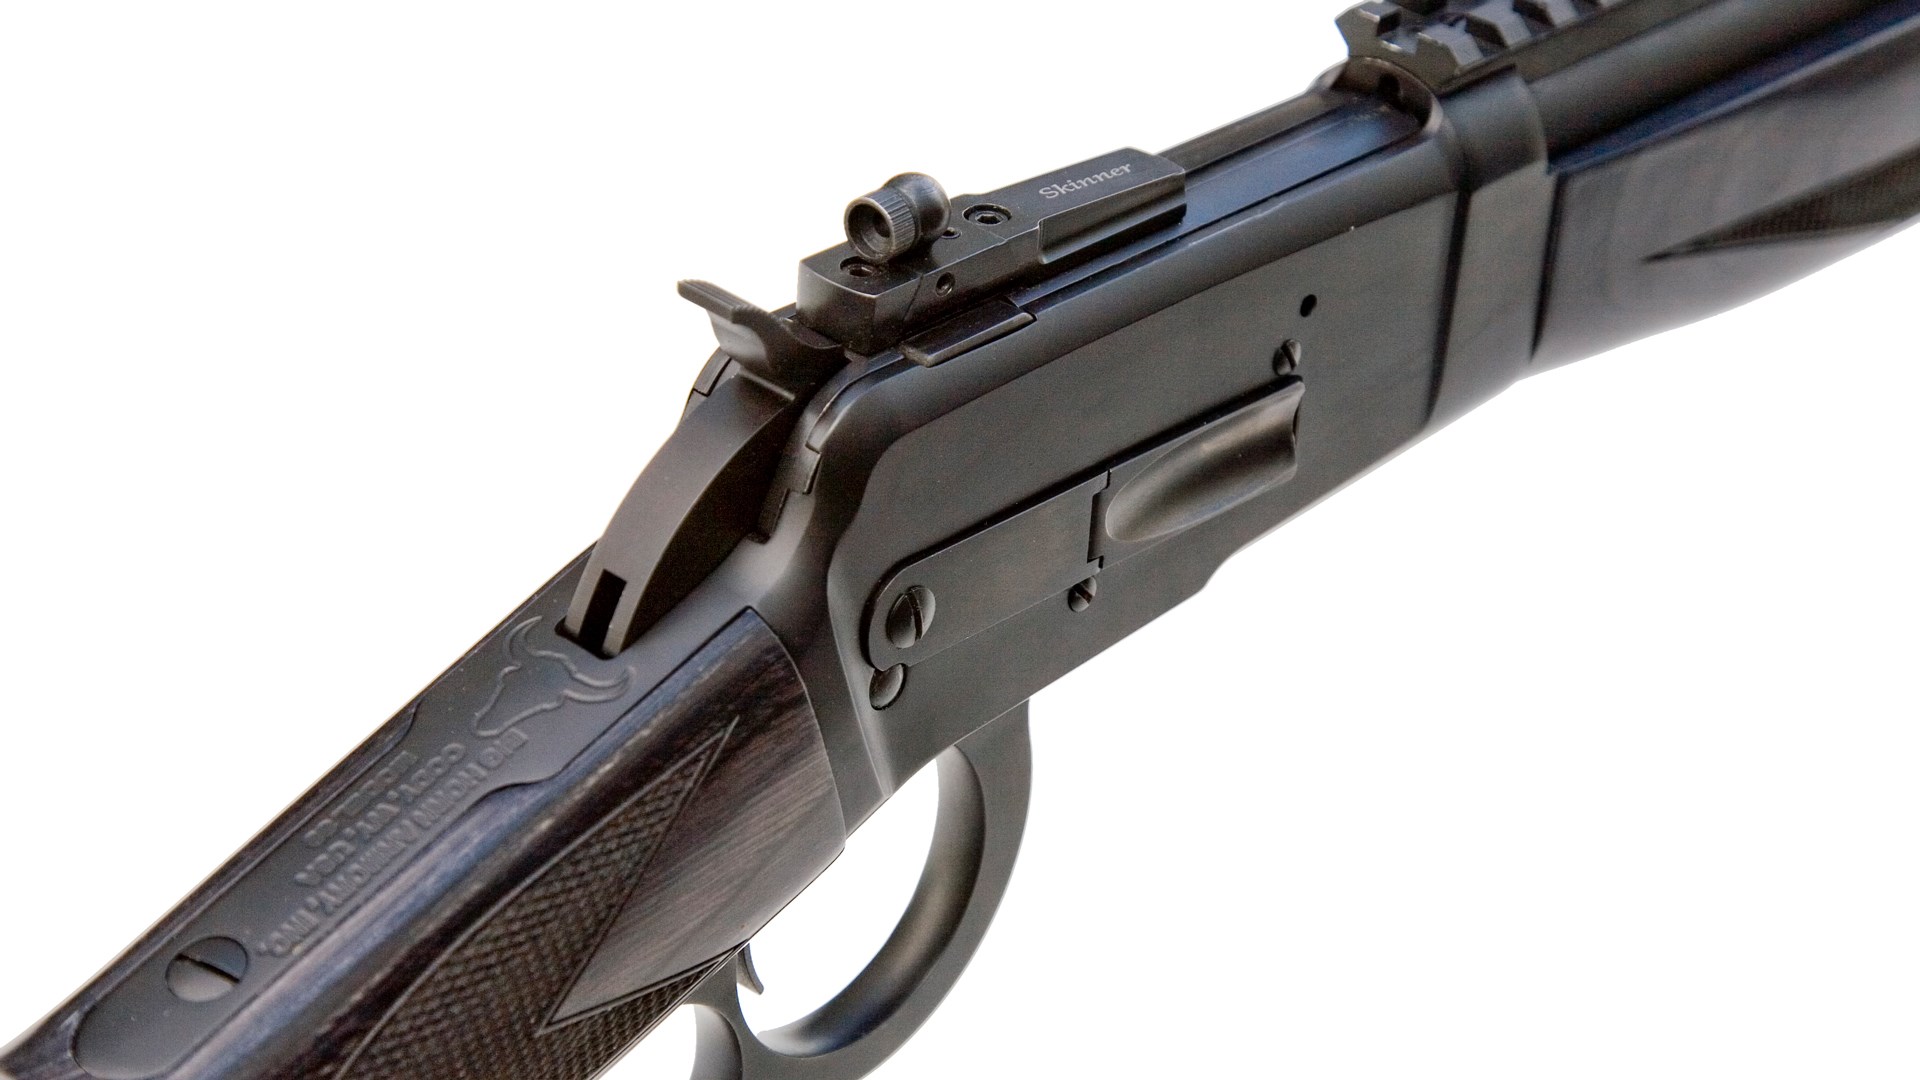 Black Thunder receiver lever-action rifle closeup hammer skinner aperture sight picatinny rail wood